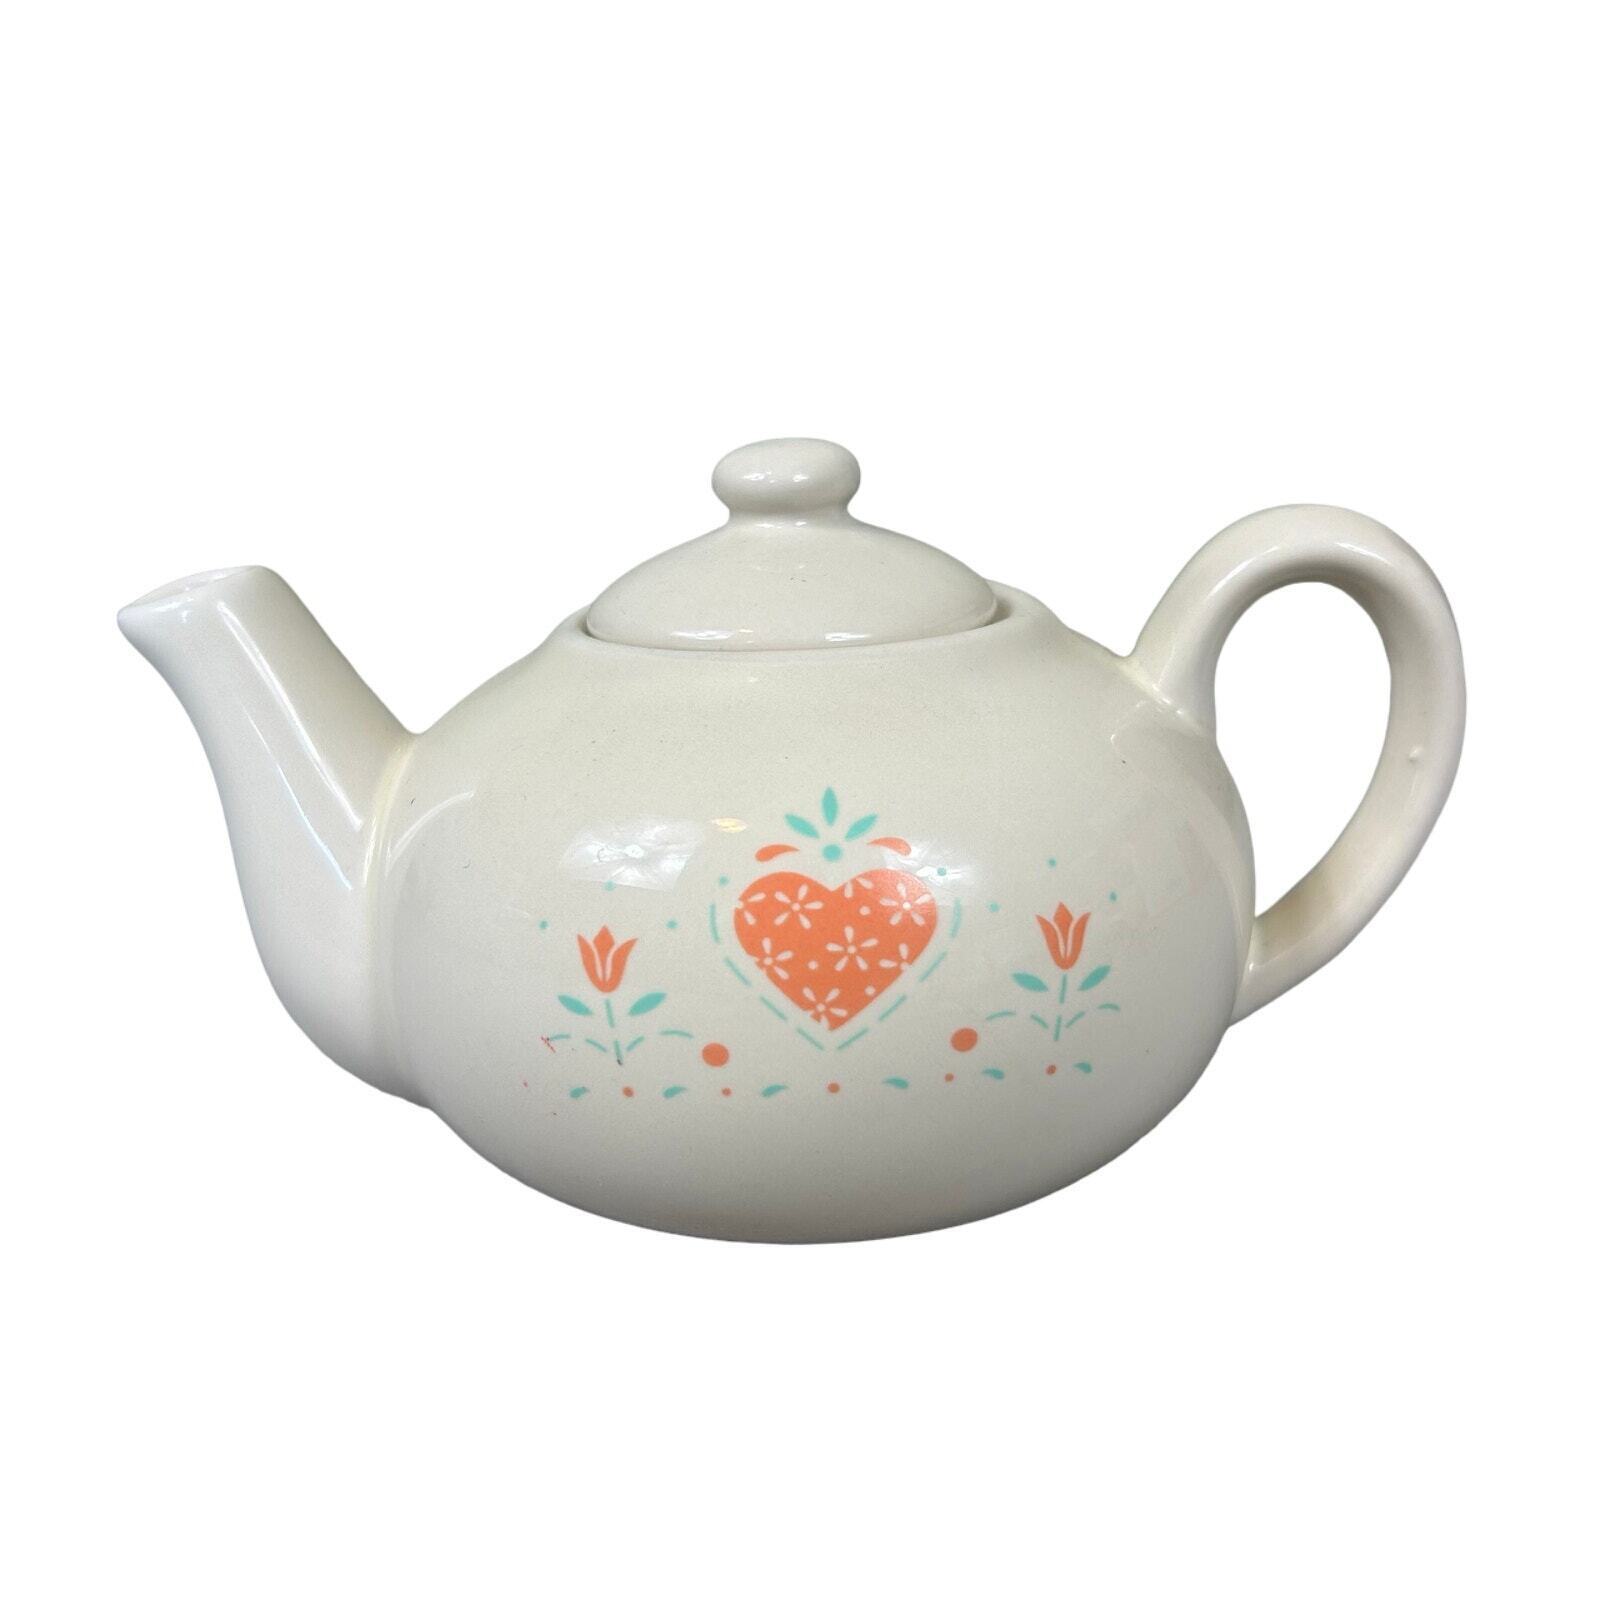 Vintage Corelle Coordinates FOREVER YOURS personal teapot 1 cup size